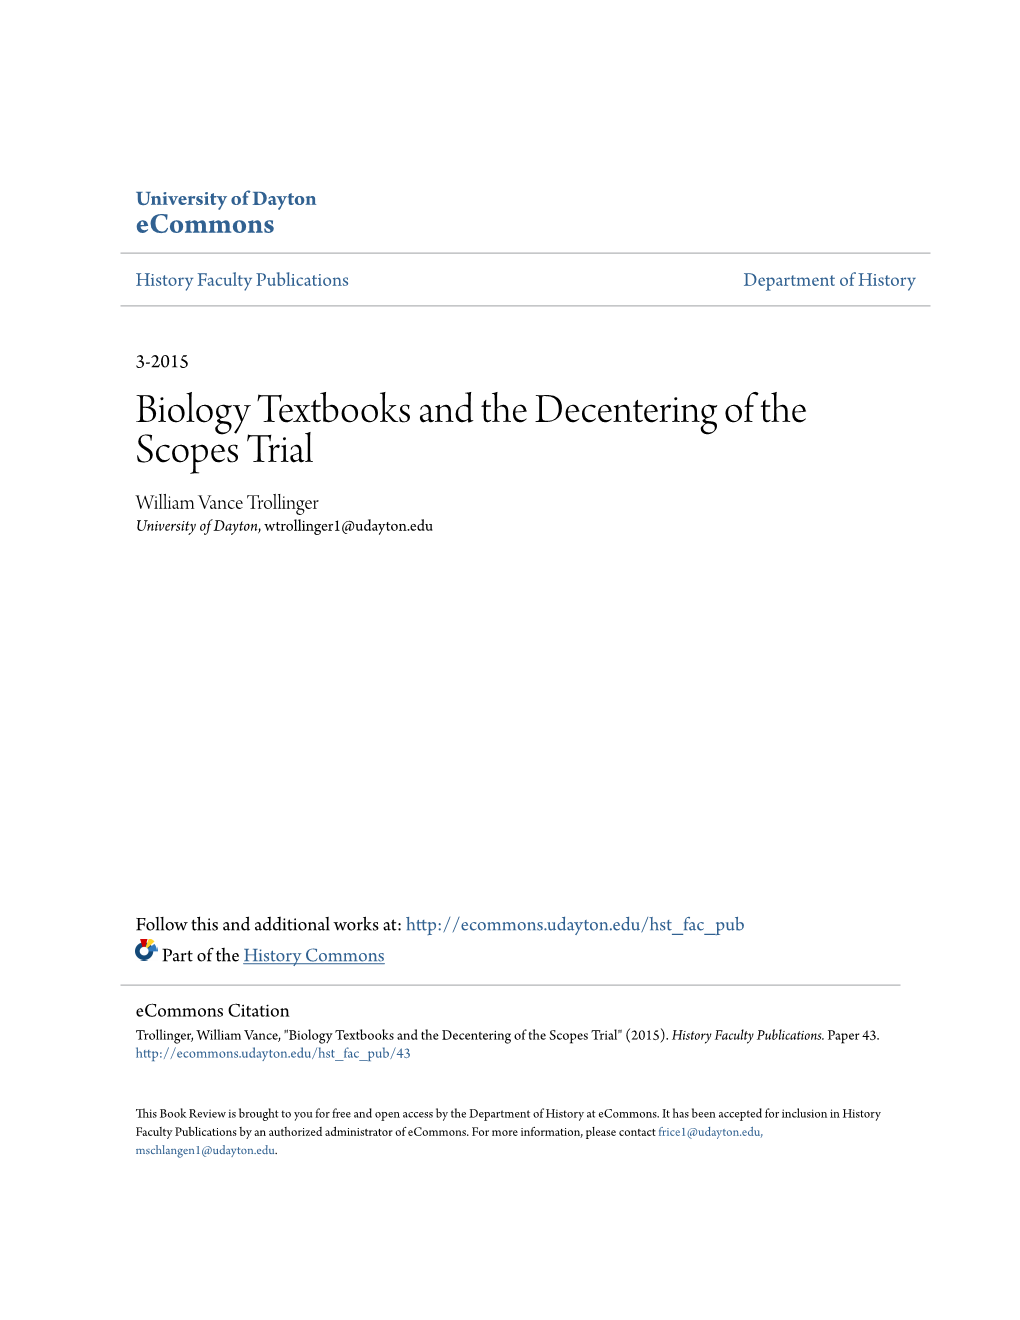 Biology Textbooks and the Decentering of the Scopes Trial William Vance Trollinger University of Dayton, Wtrollinger1@Udayton.Edu